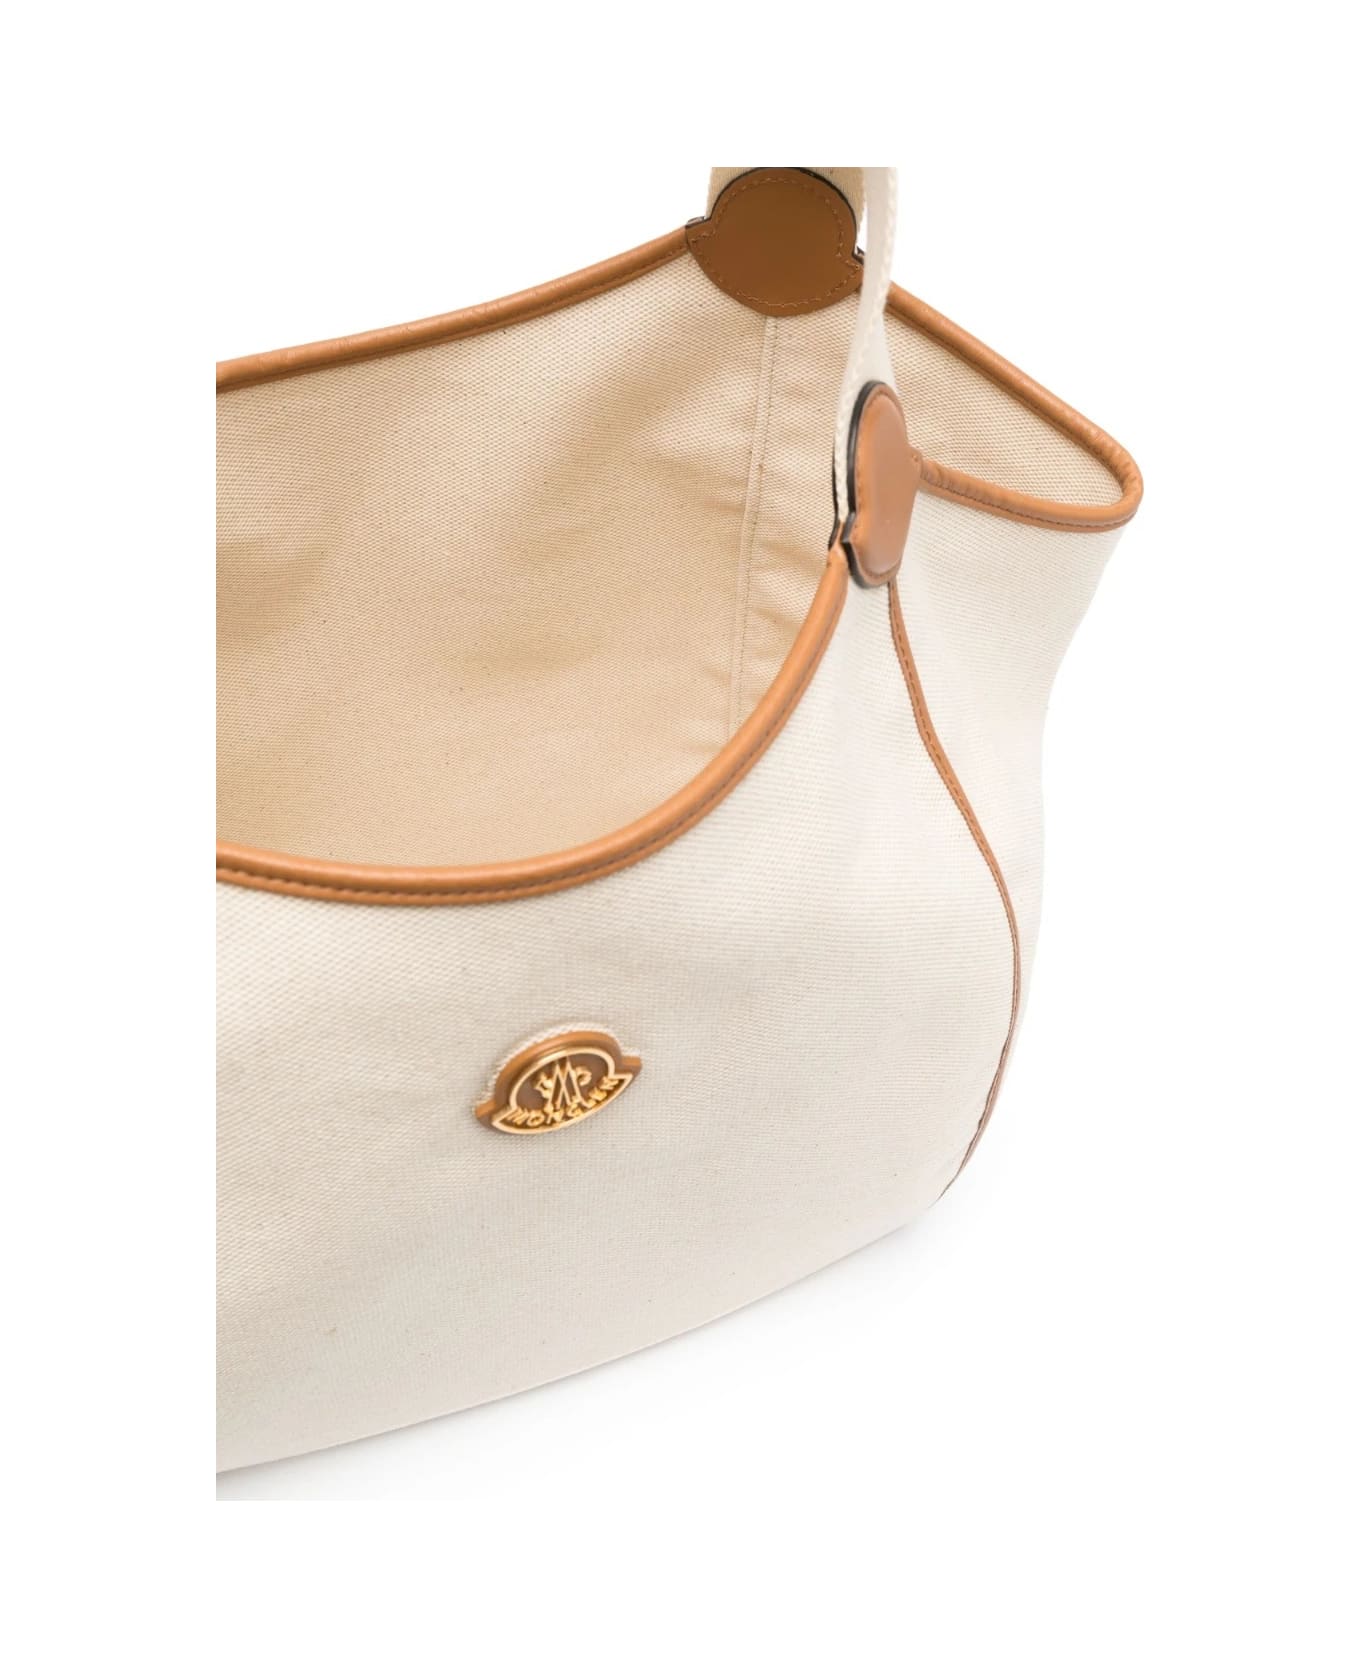 Moncler White And Orange pre-owned medium La Roue de la Fortune Lady Dior bag - Multicolor